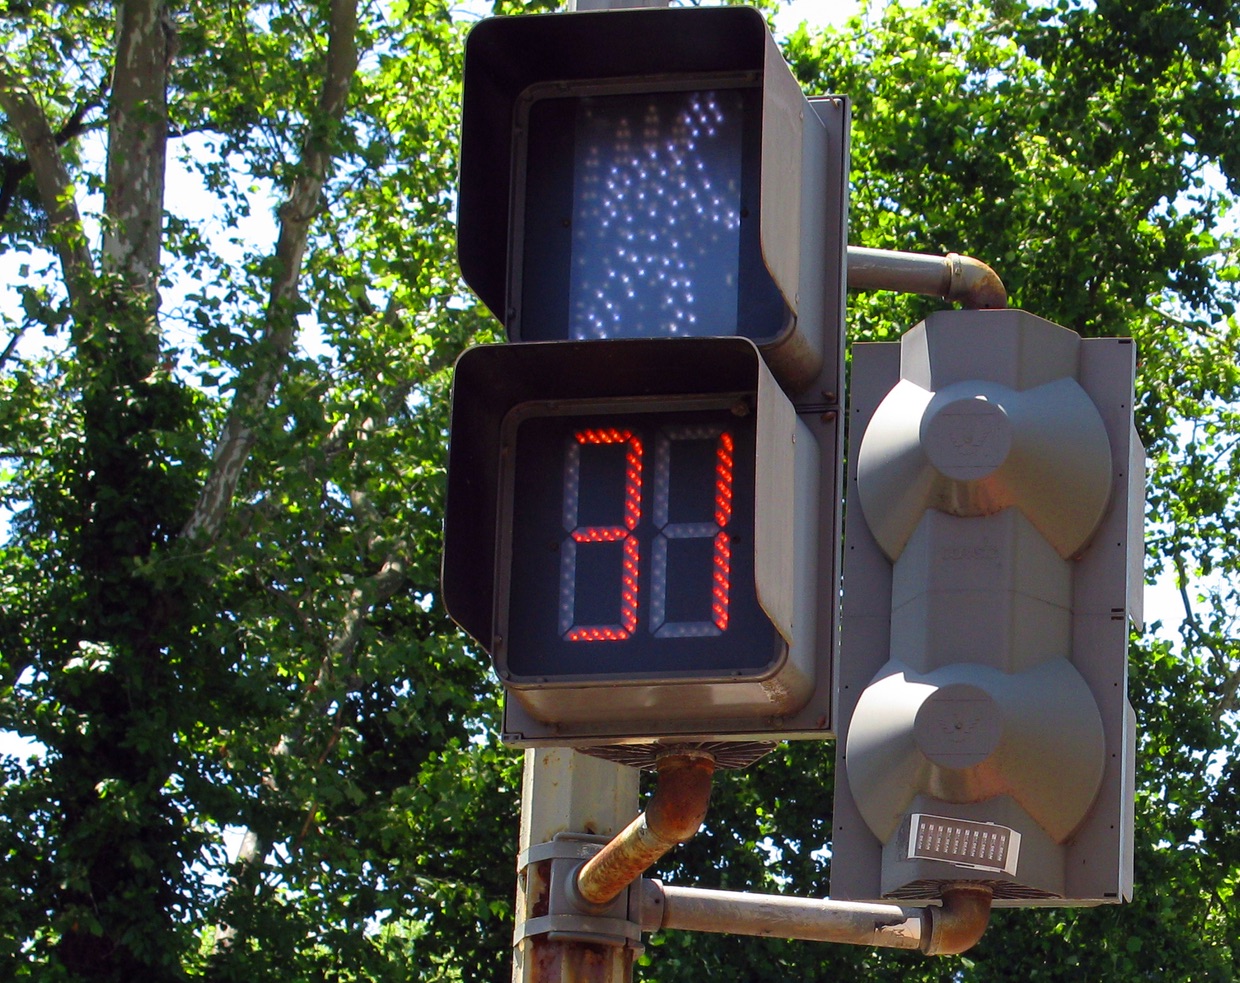 Crosswalk signal countdown timer